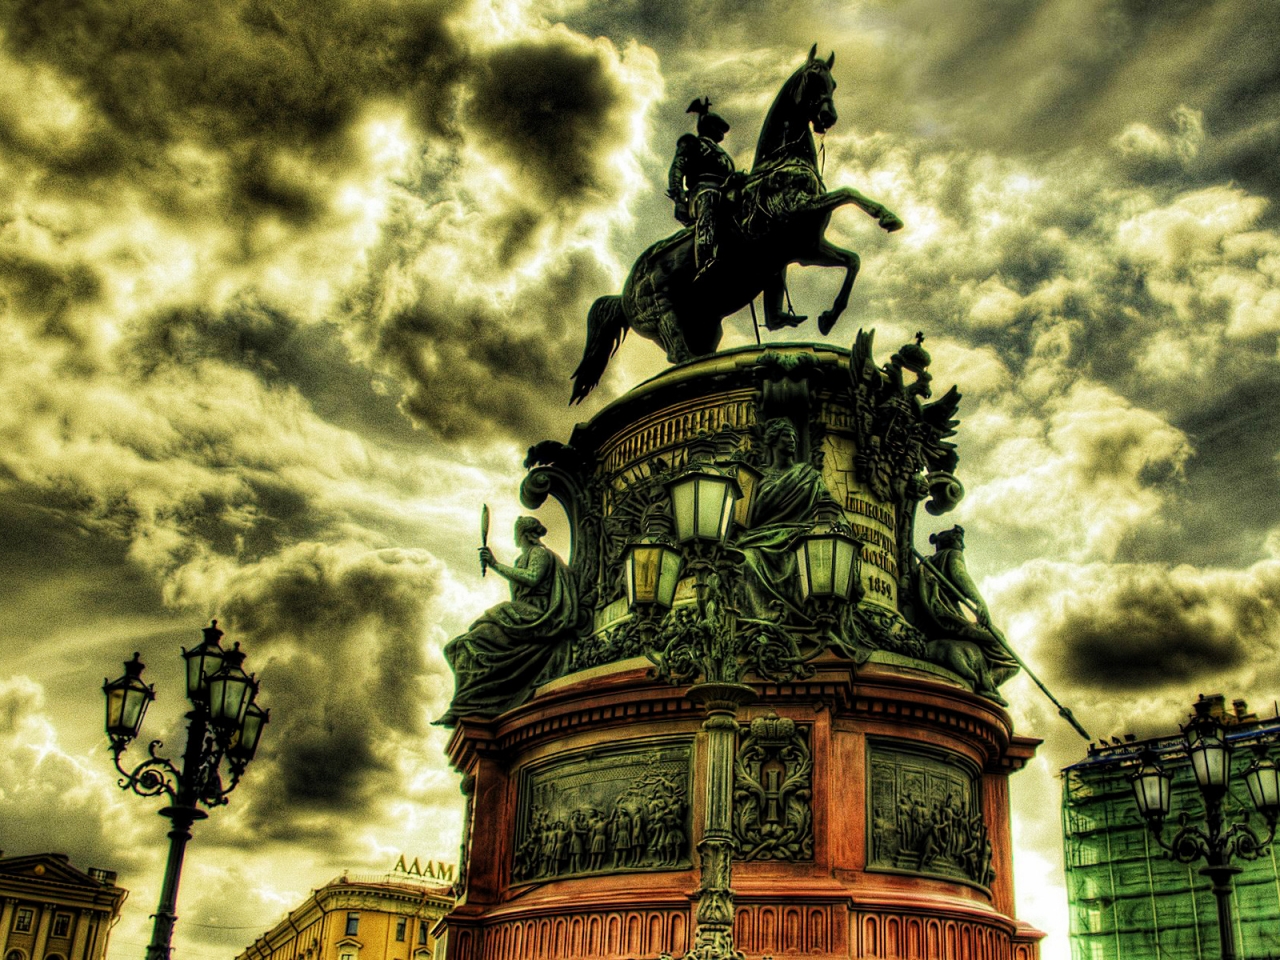 Bronze Horseman St Petersburg for 1280 x 960 resolution